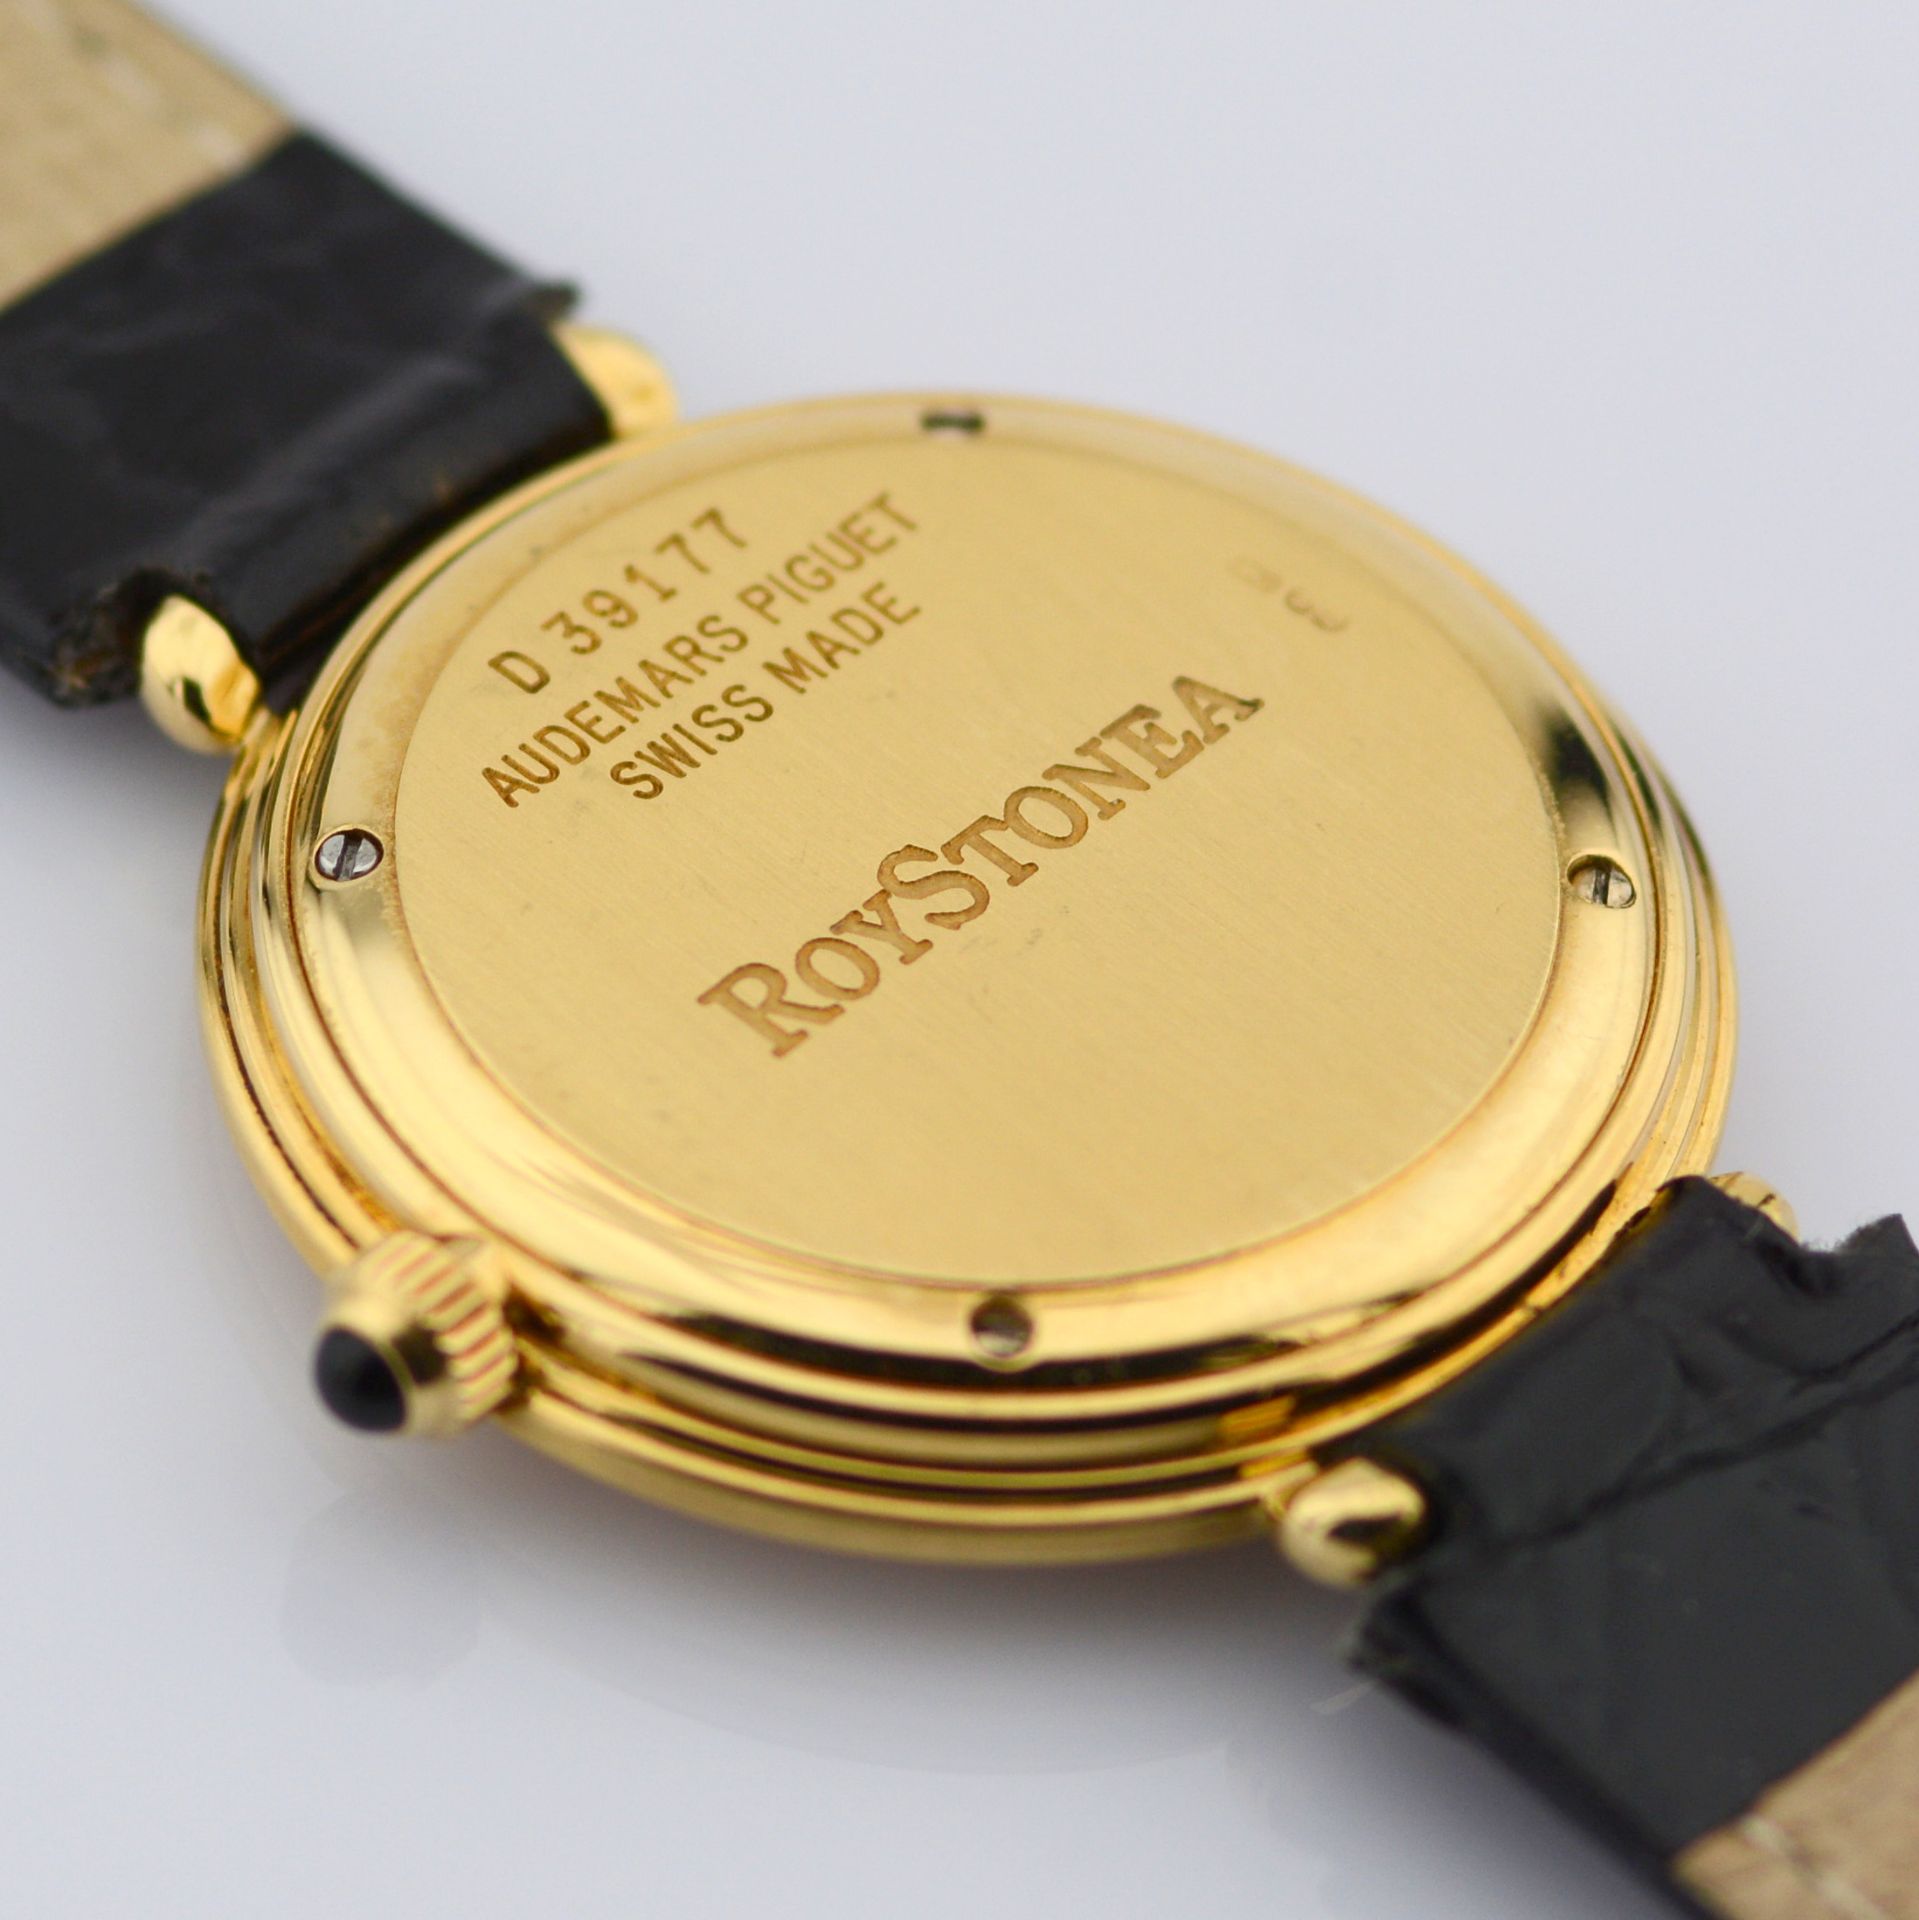 Audemars Piguet / Roy Stonea 18K Yellow Gold - Lady's Yellow gold Wrist Watch - Image 12 of 14